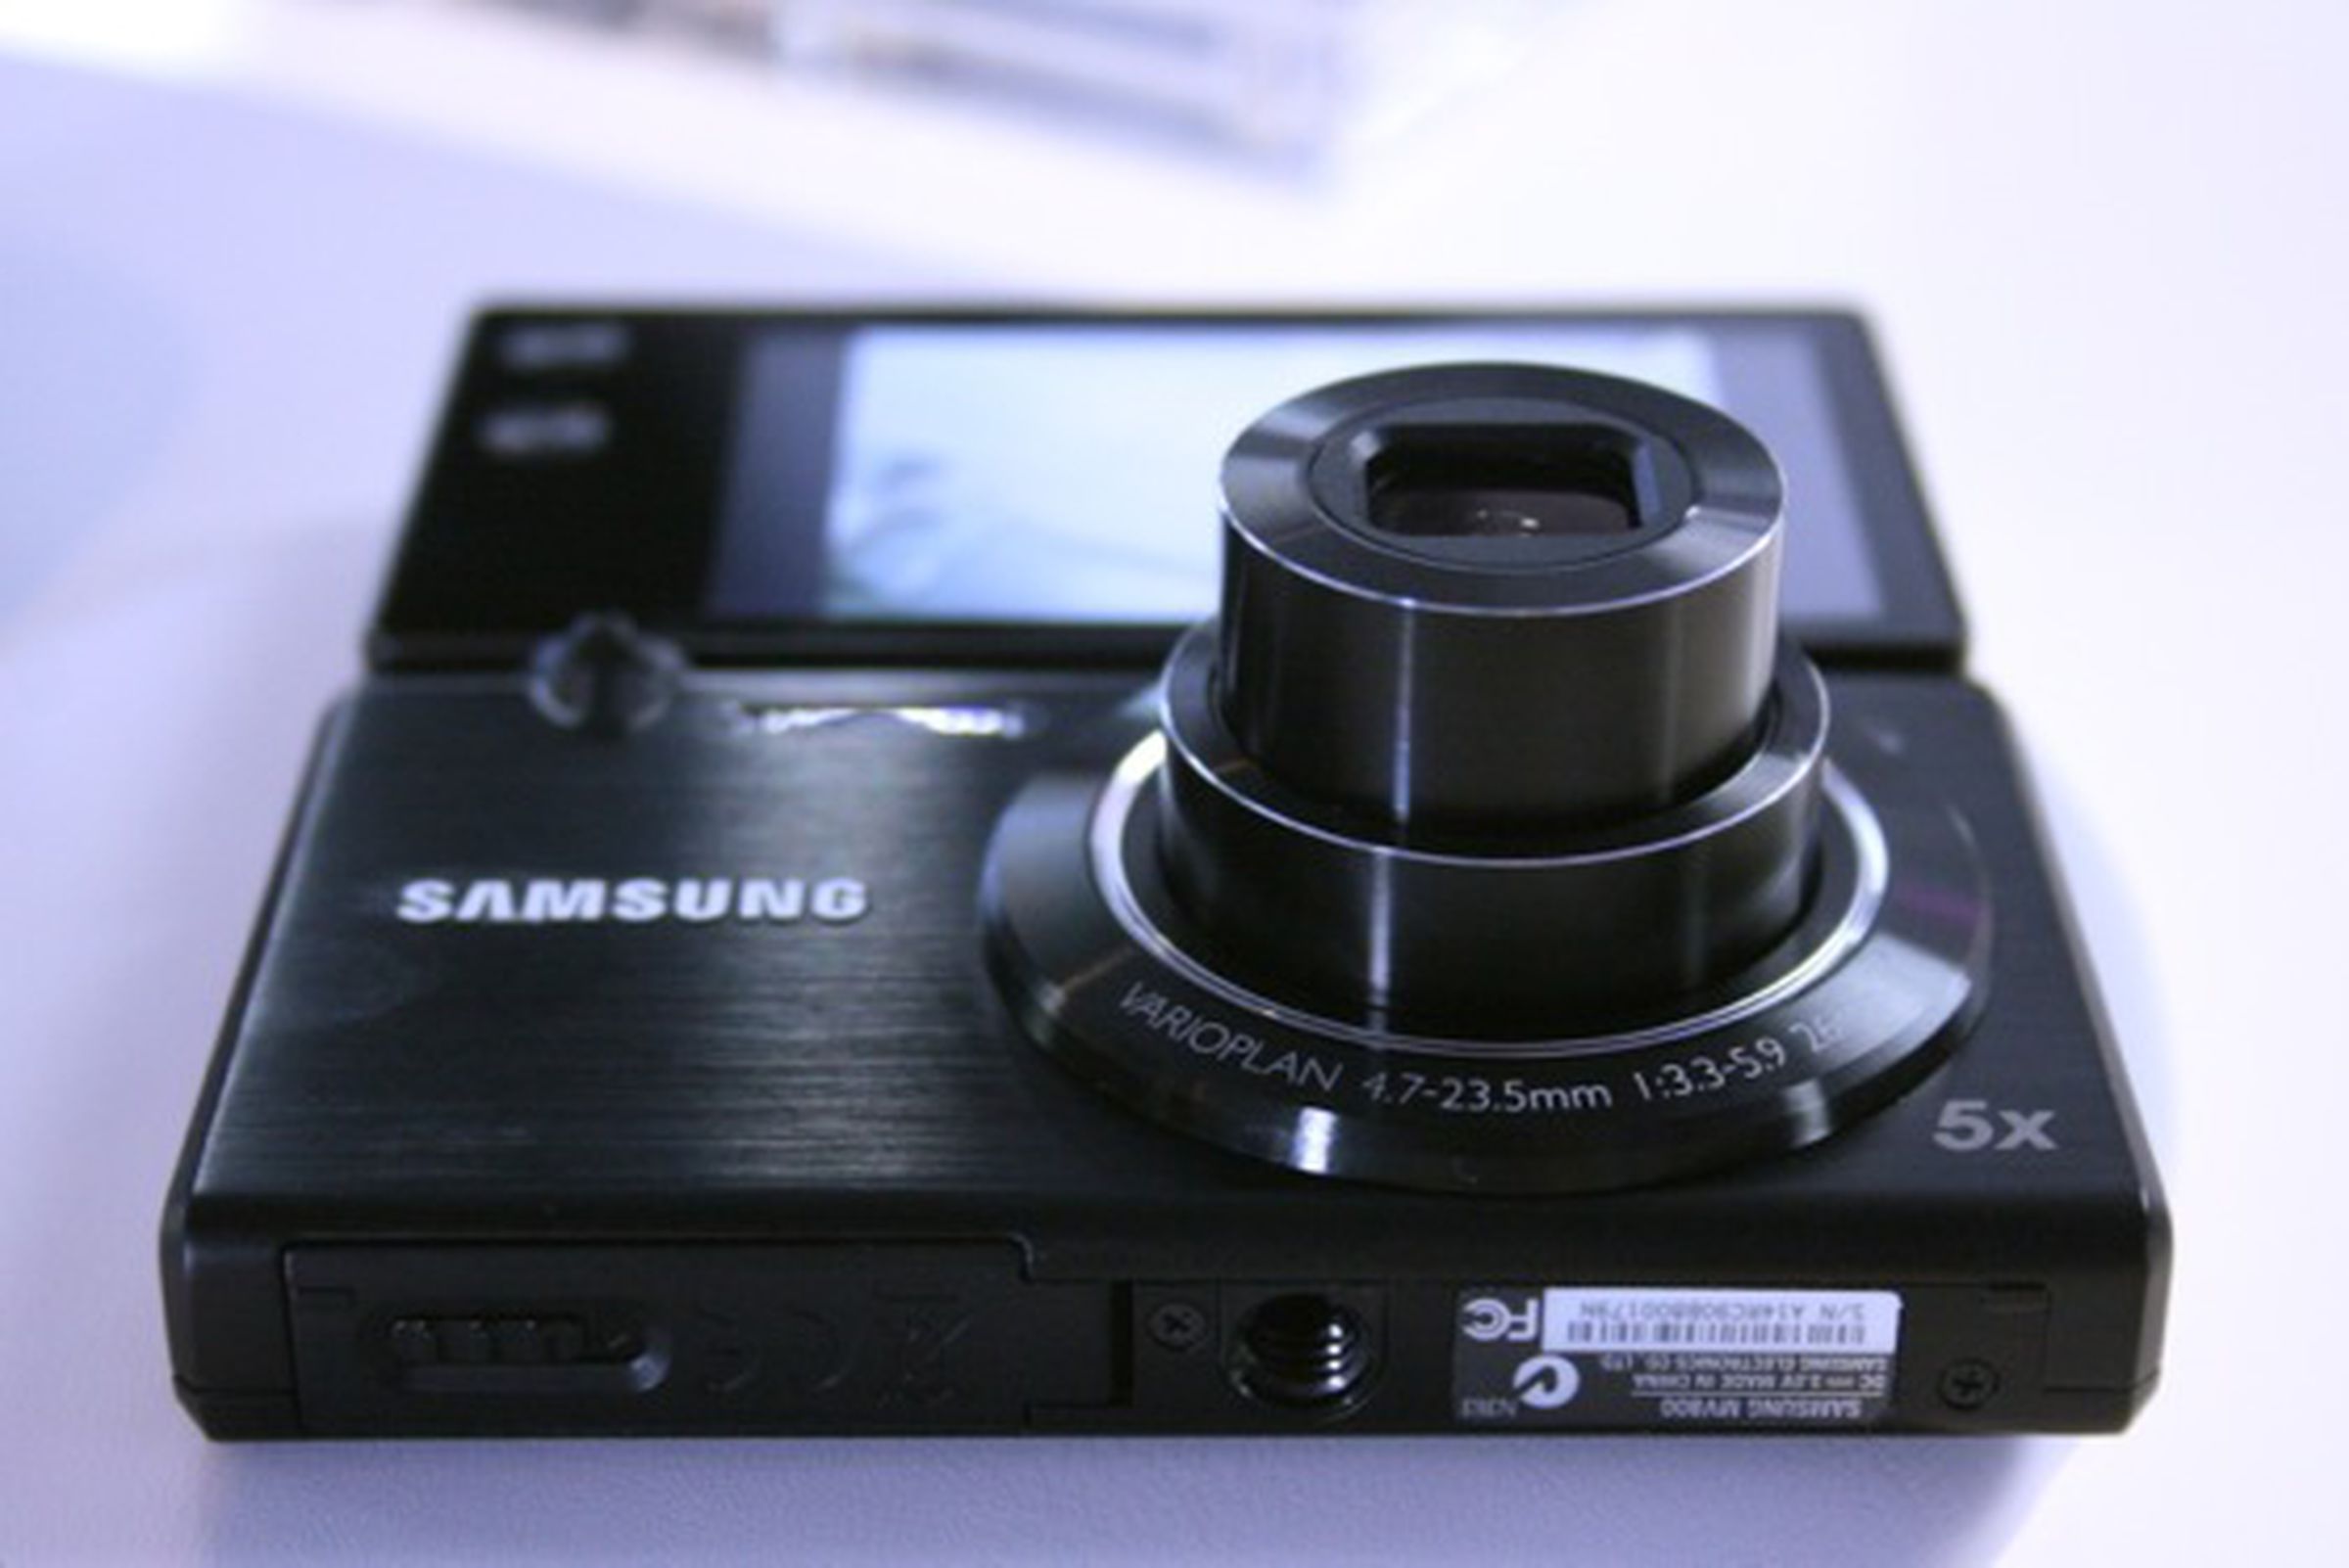 Samsung MV800 hands-on photos